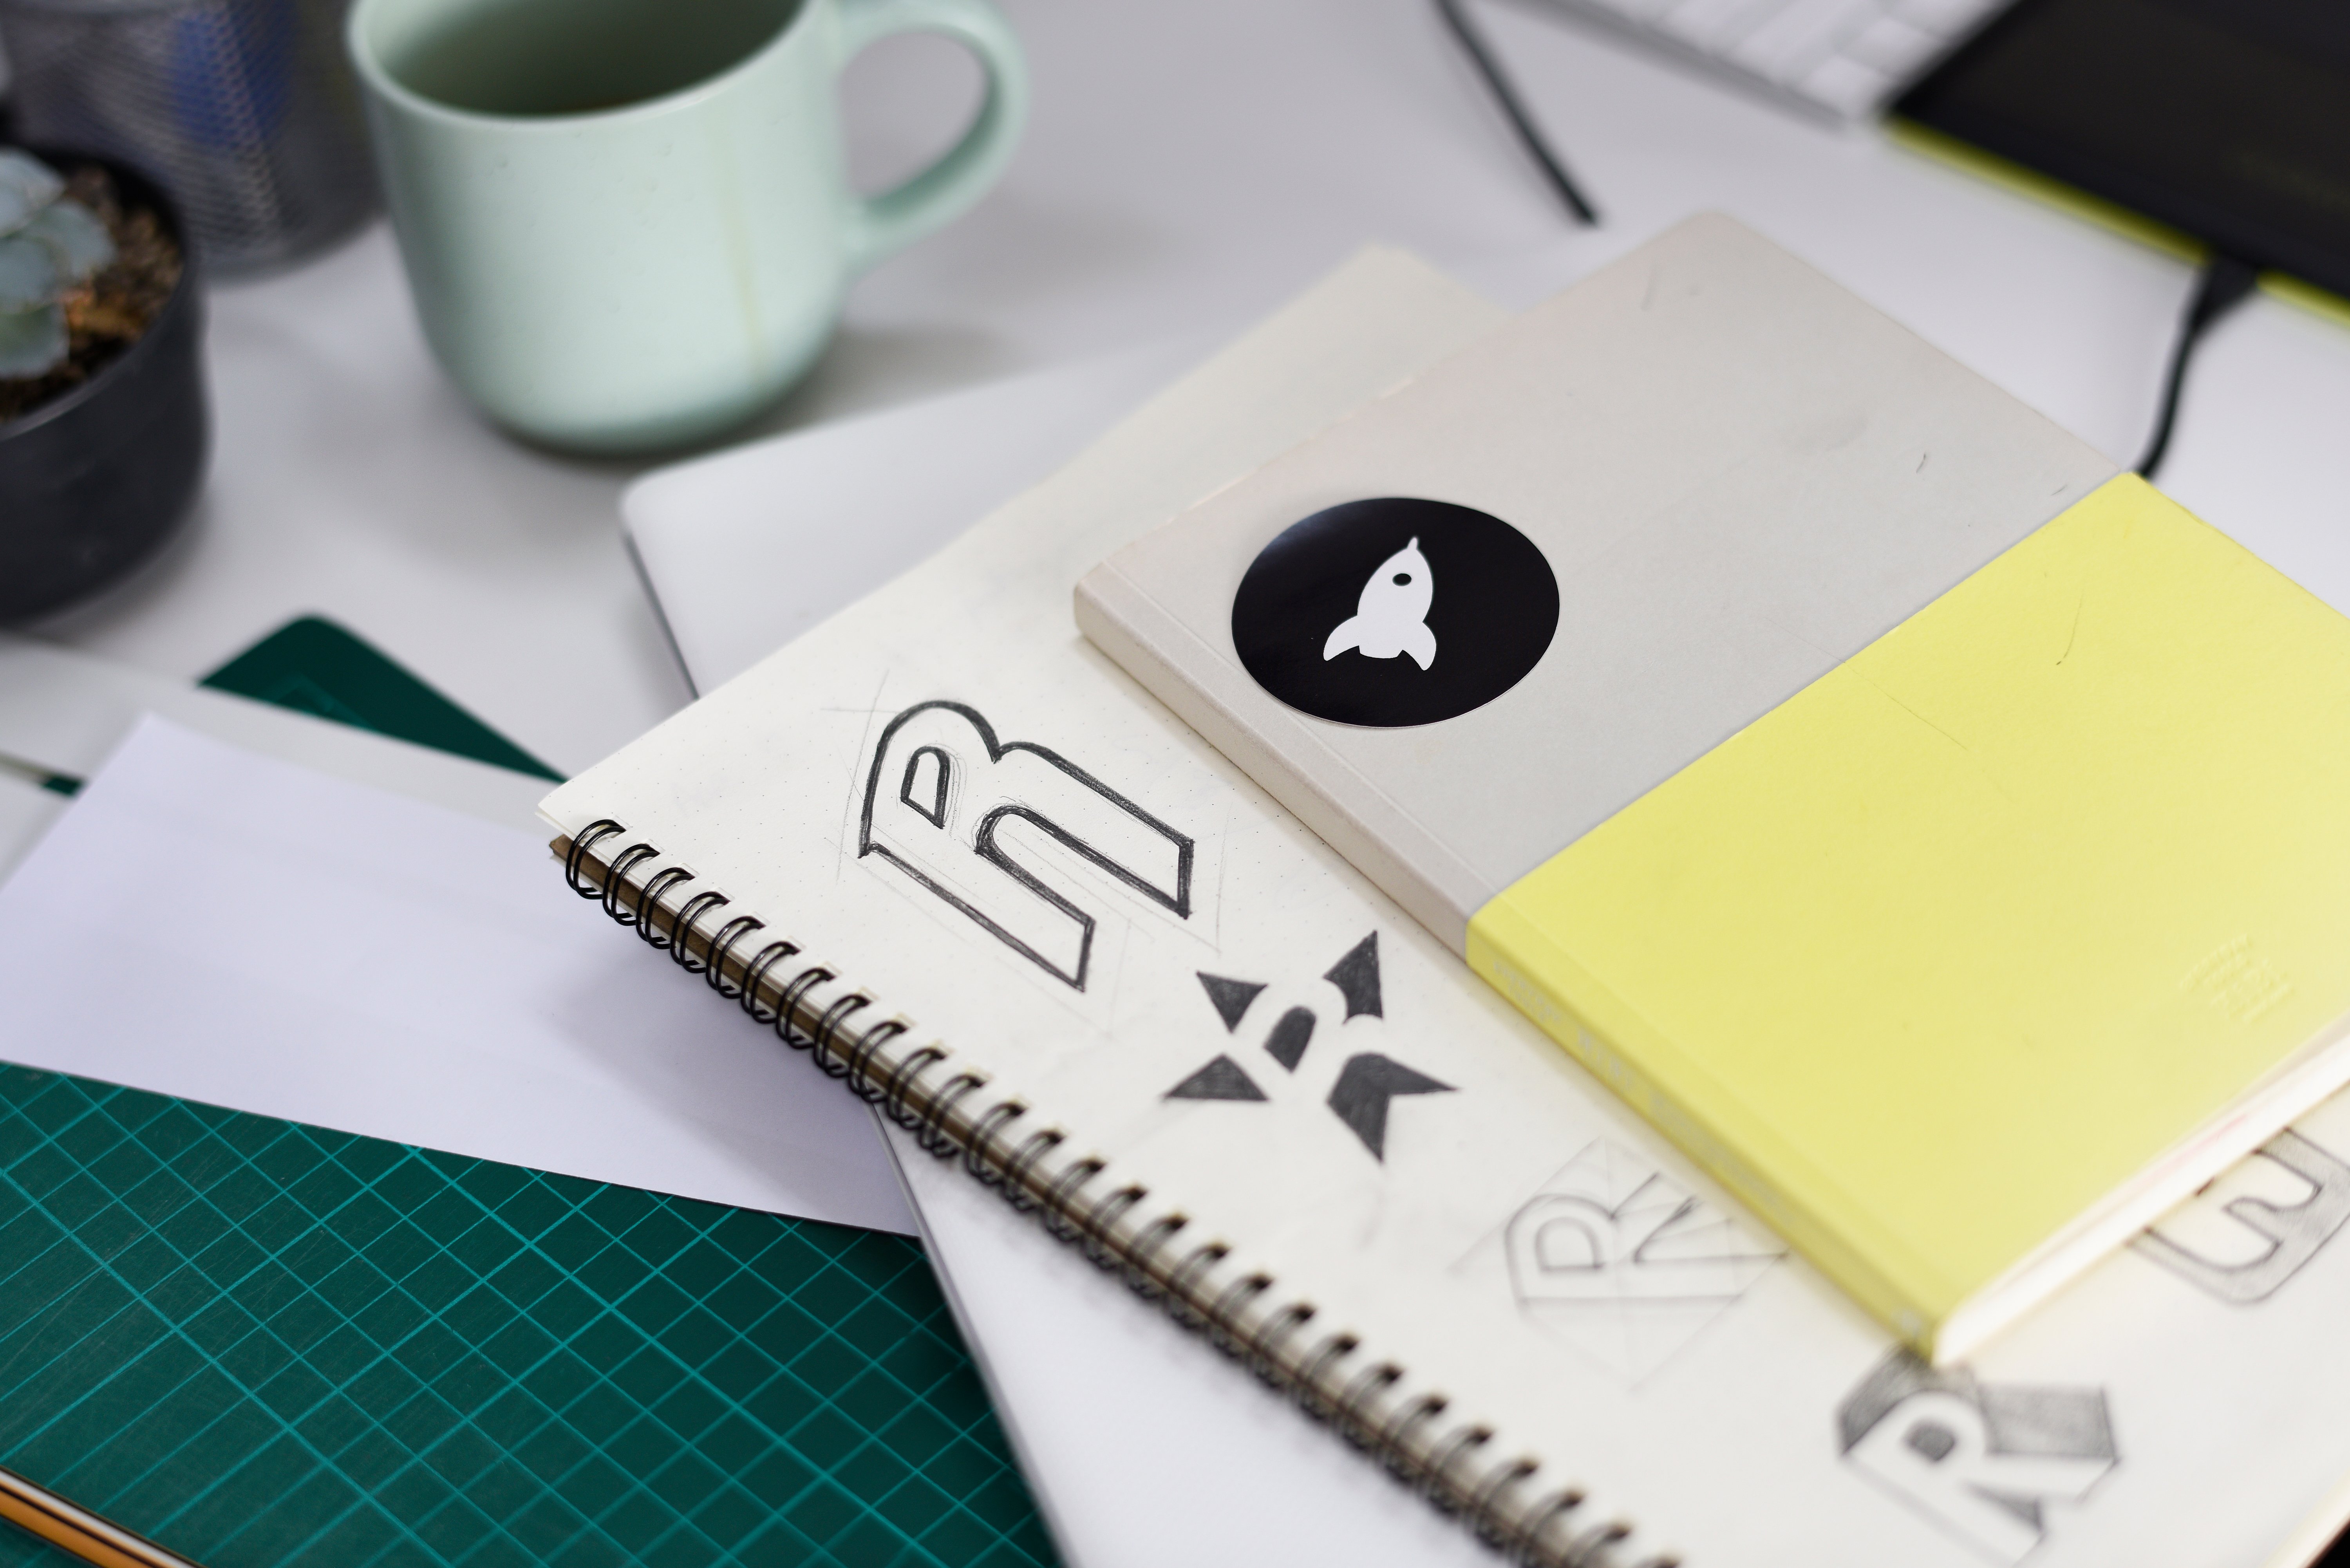 notebook-with-brand-logo-creative-design-ideas-2022-12-16-00-16-38-utc